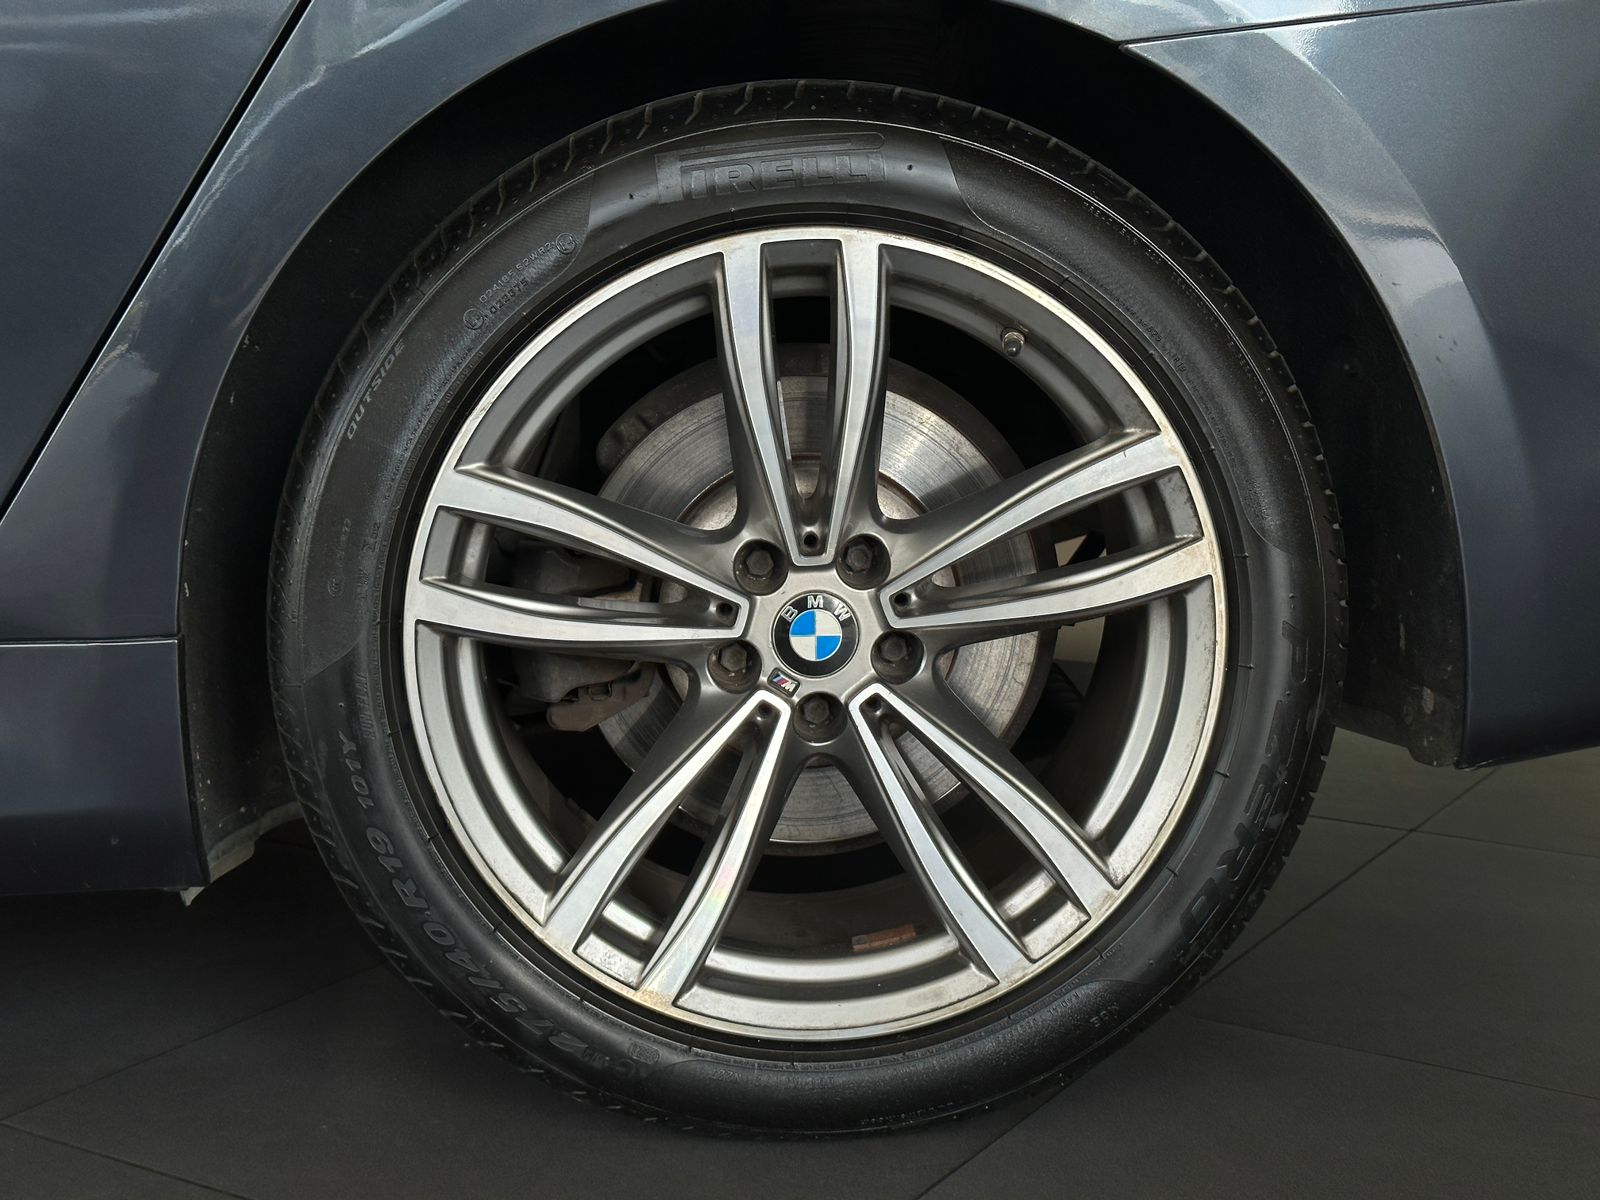 BMW 730 LD - 2016 model - 76949 kms Wheel